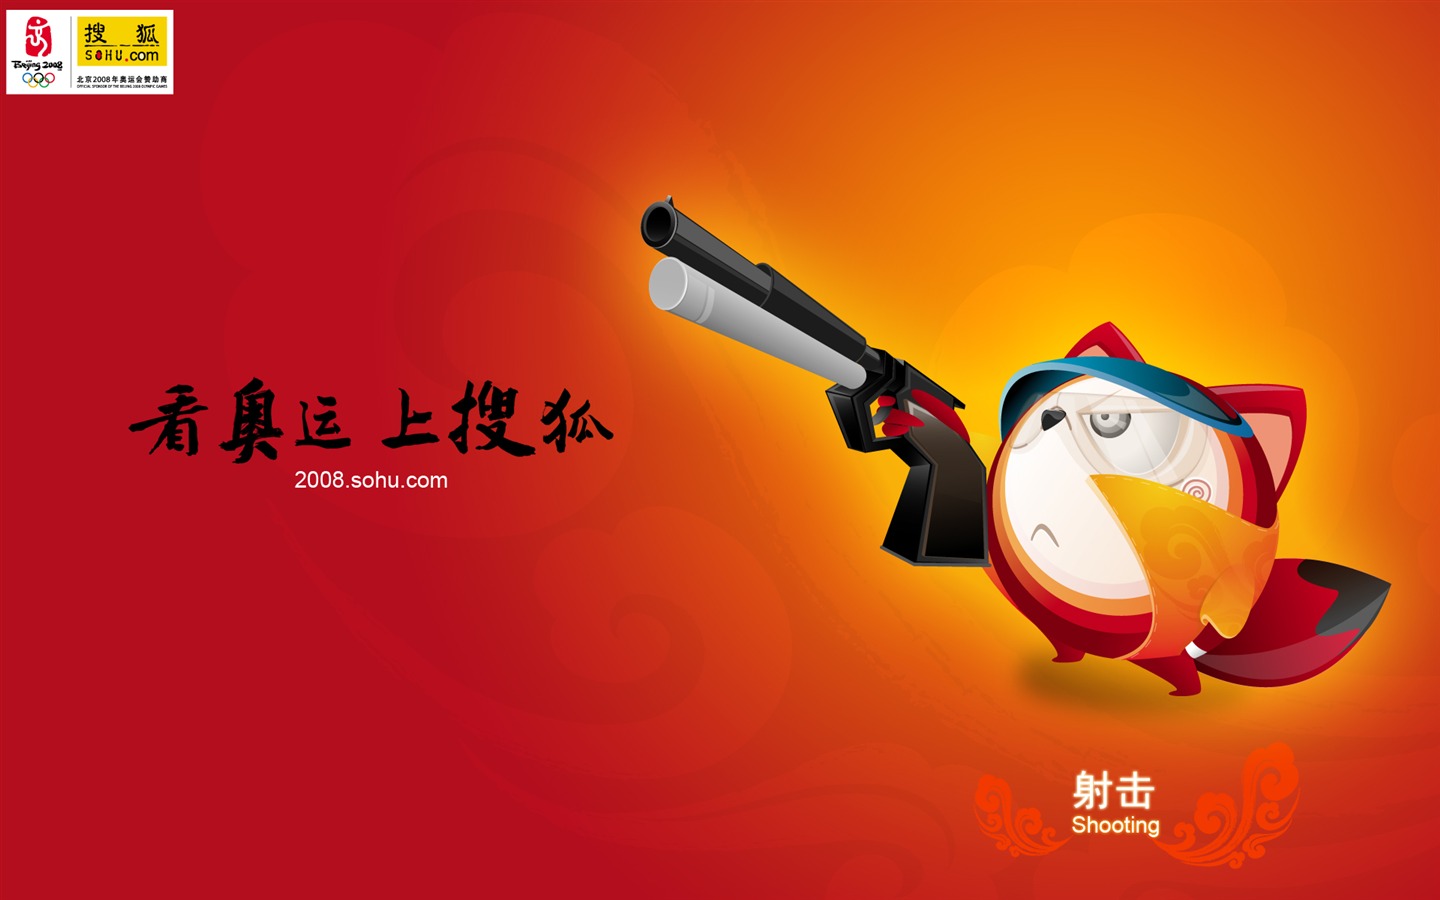 Sohu Olympic sports style wallpaper #15 - 1440x900